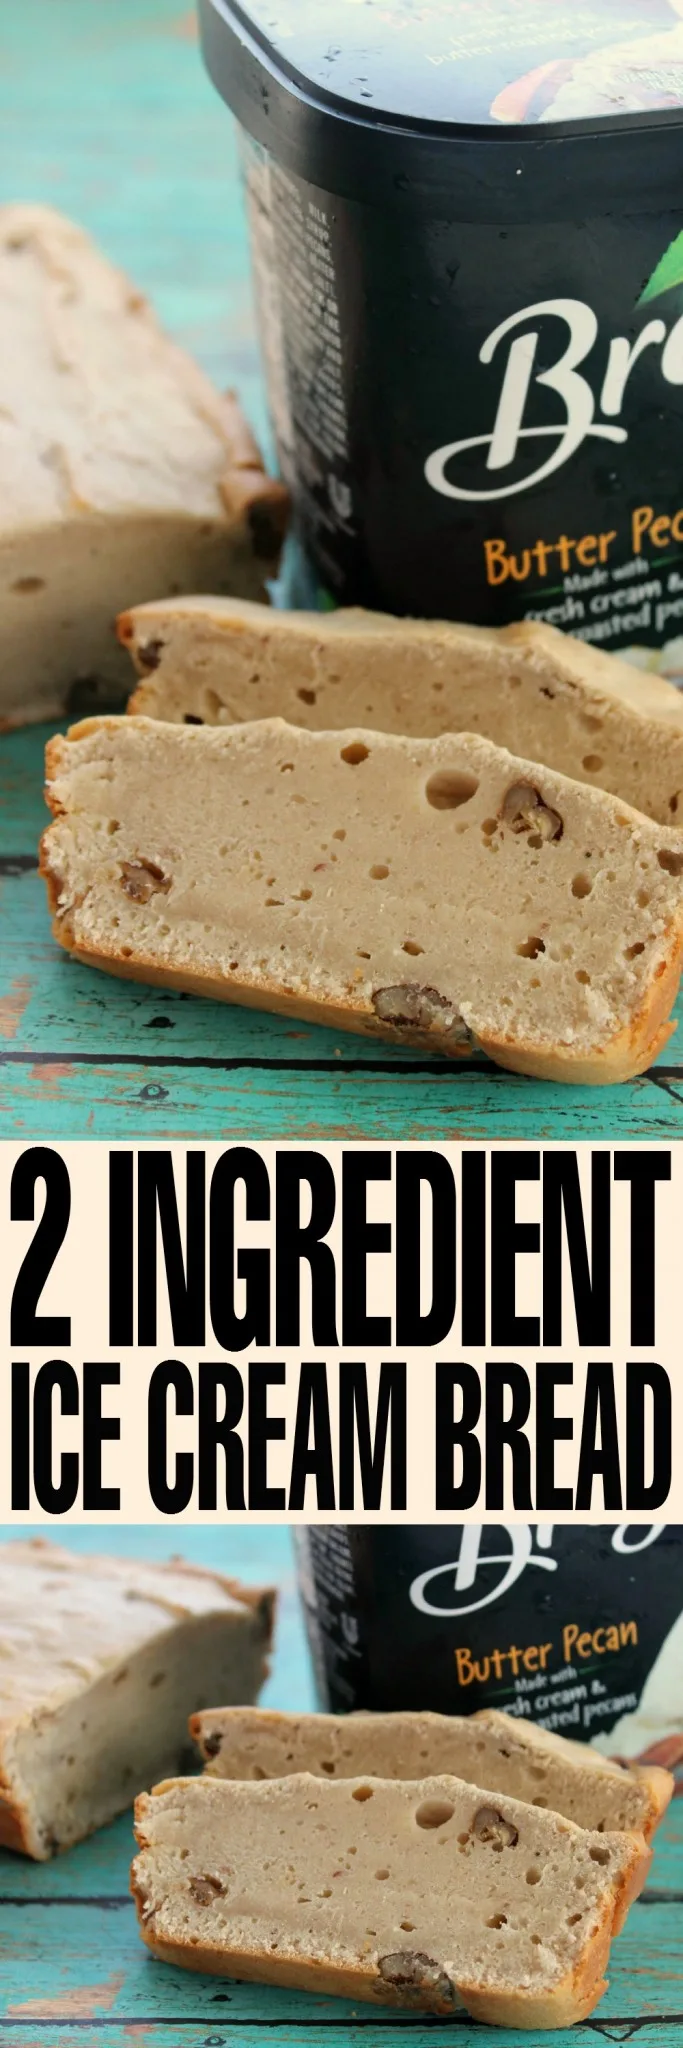 2 Ingredient Ice Cream Bread